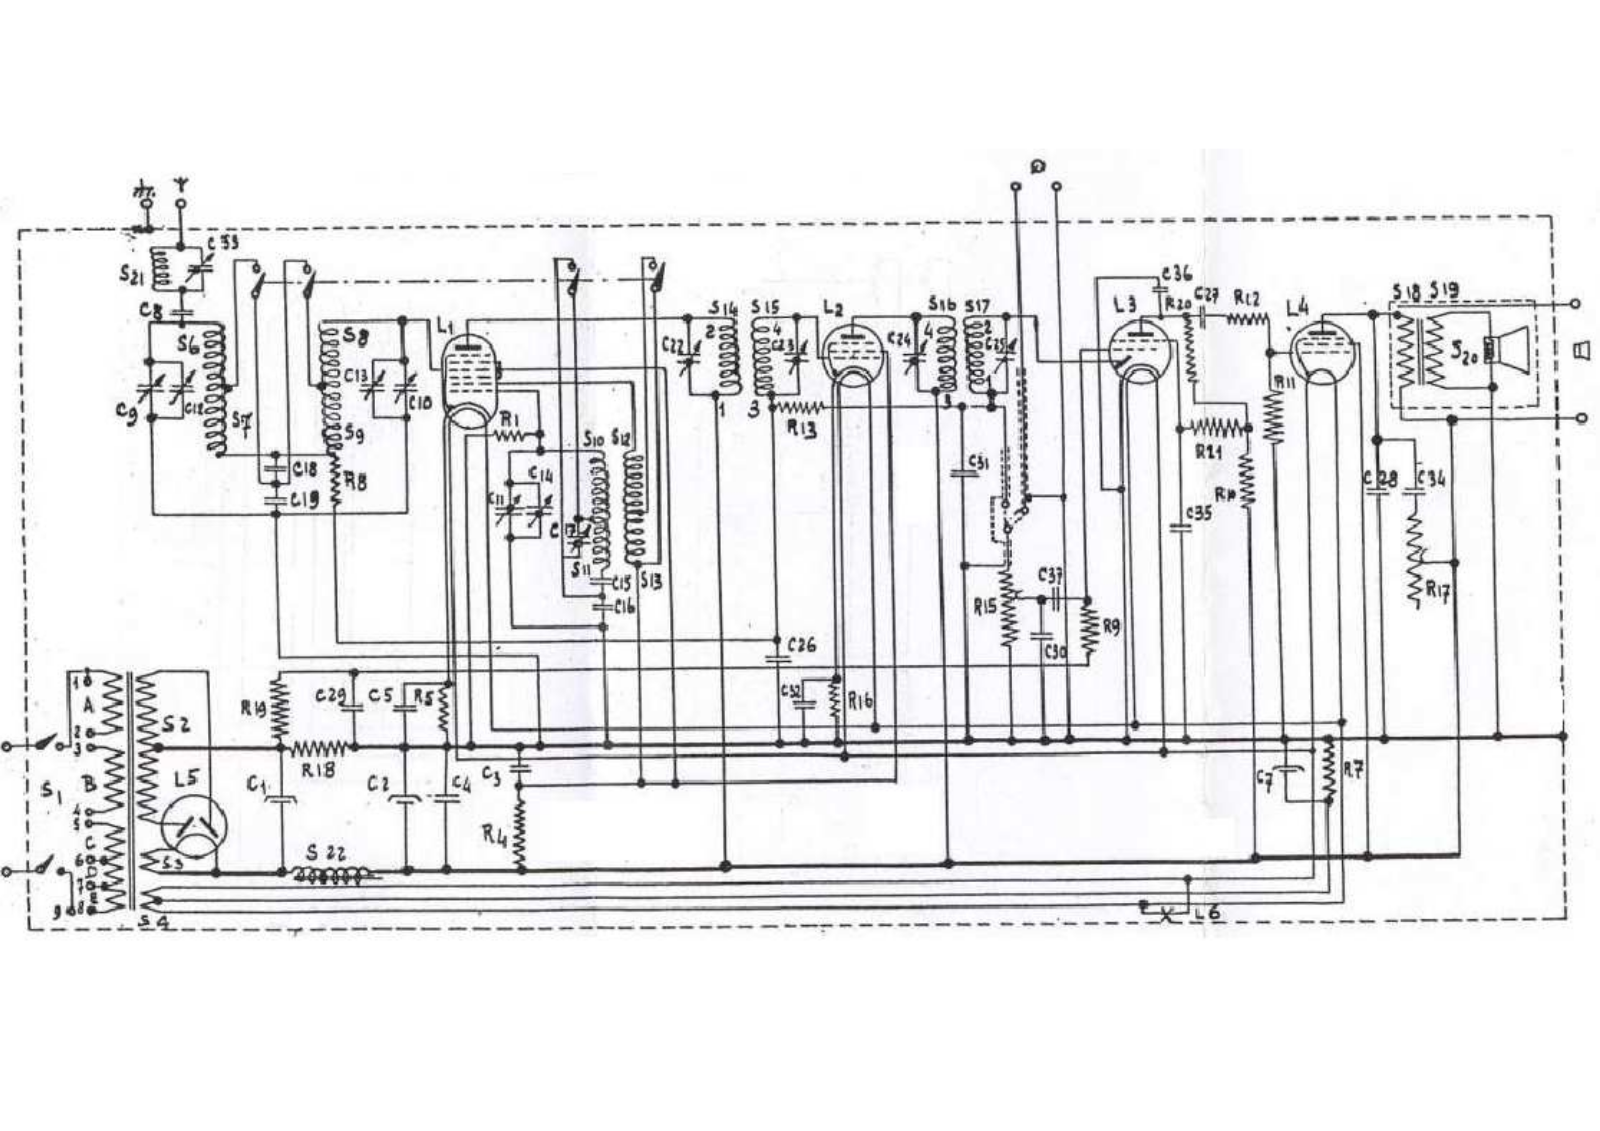 Philips 523a schematic